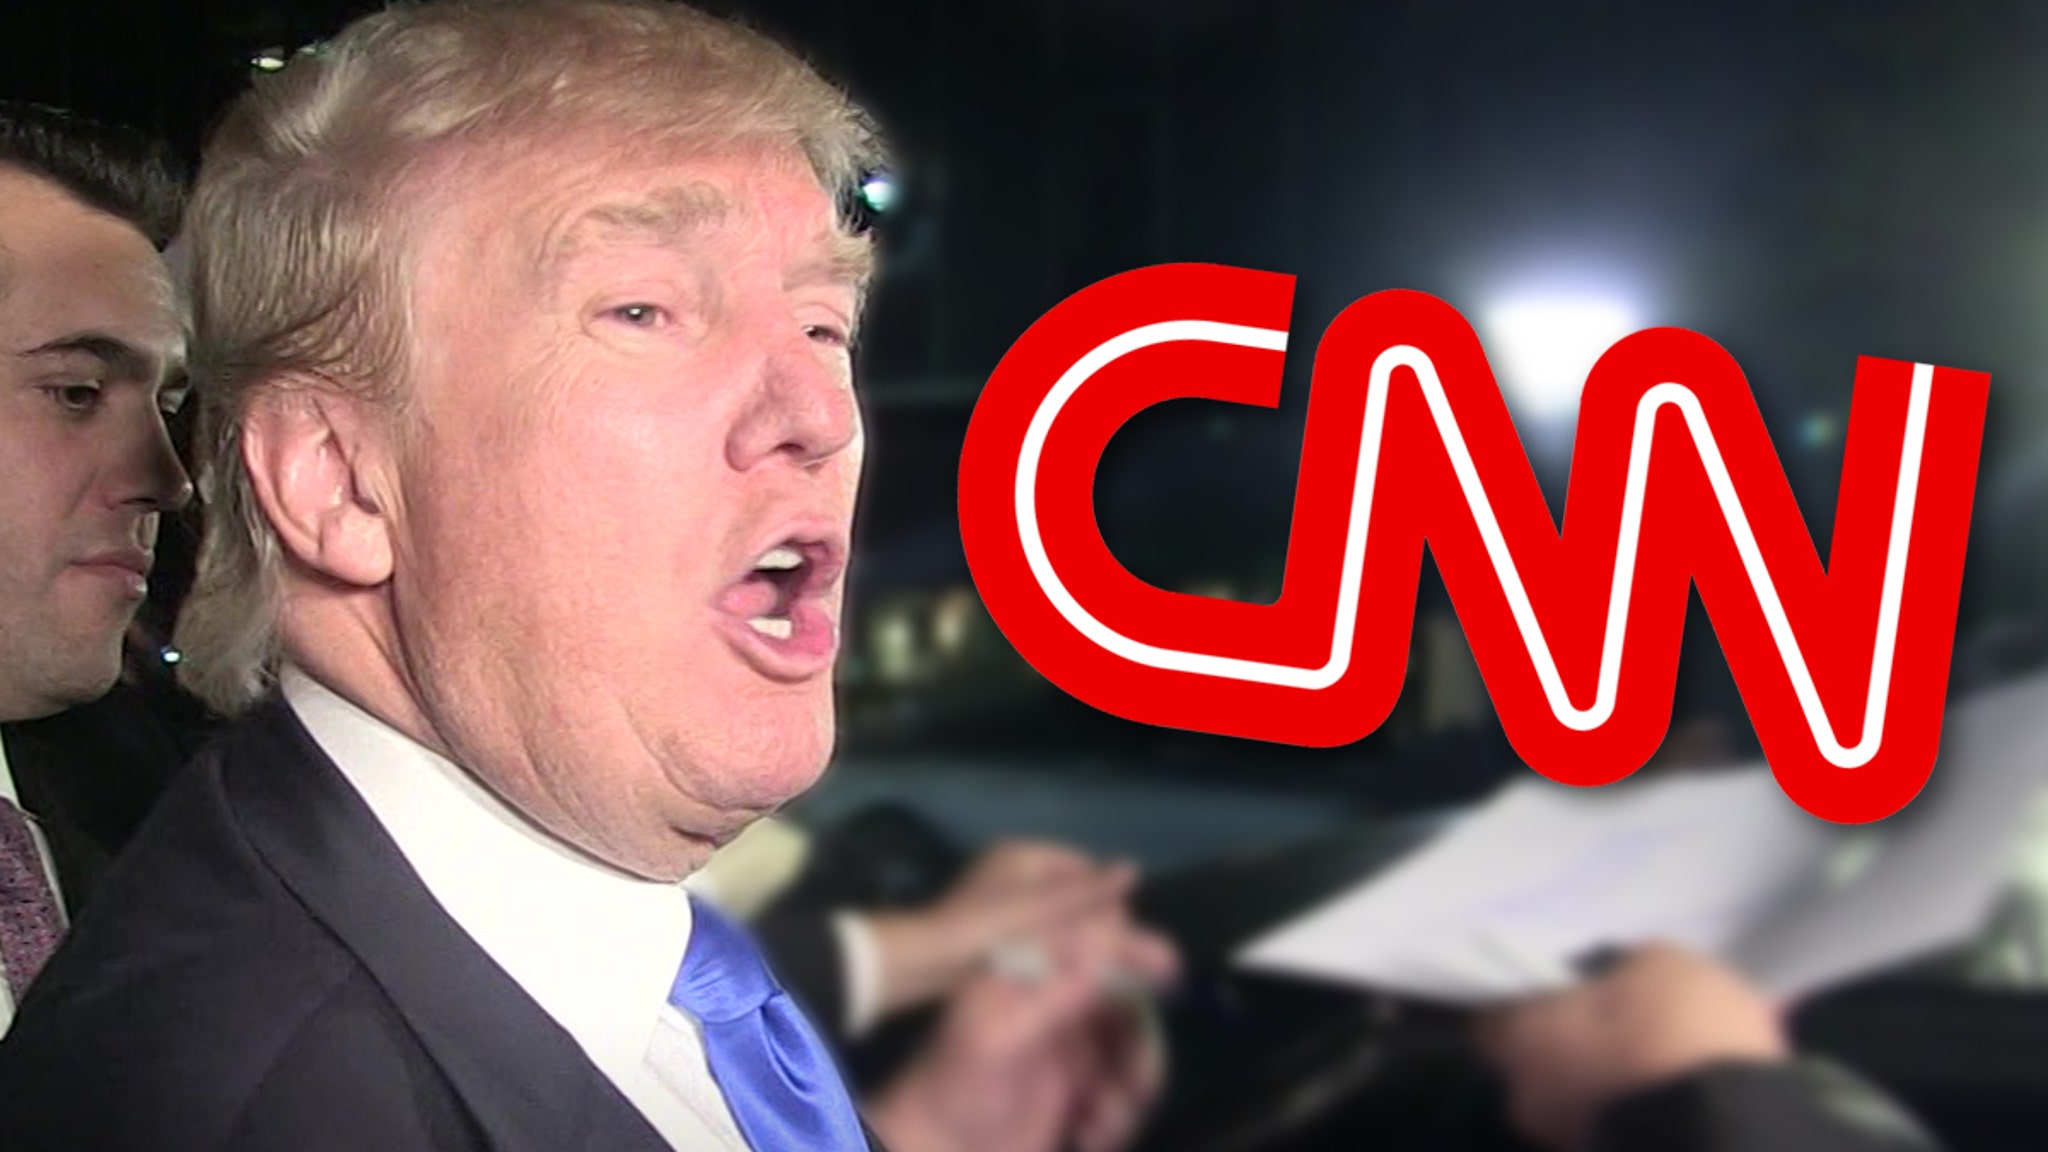 Donald Trump sues CNN for defamation, seeks 5 million in damages